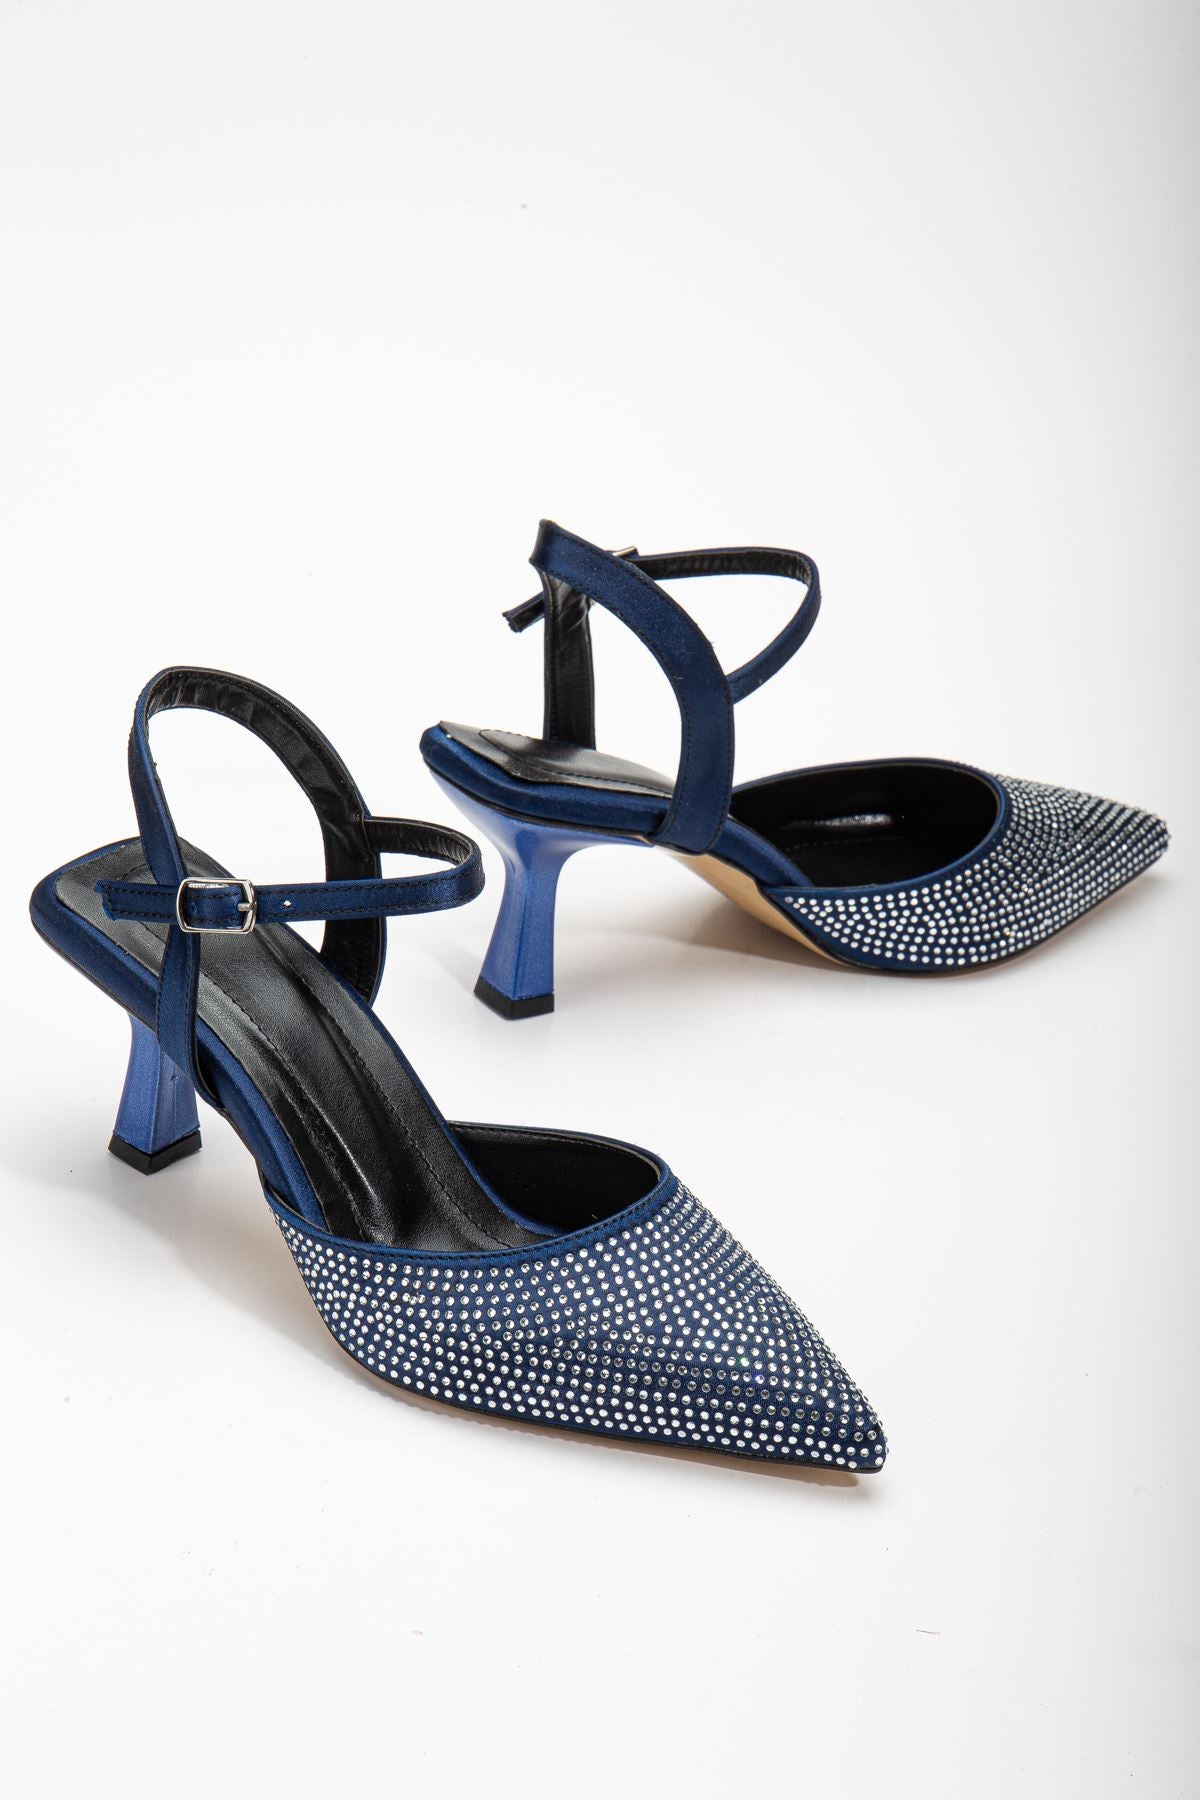 Sinda Navy Blue Satin Stone Detailed Thin Heeled Women's Shoes - STREETMODE™